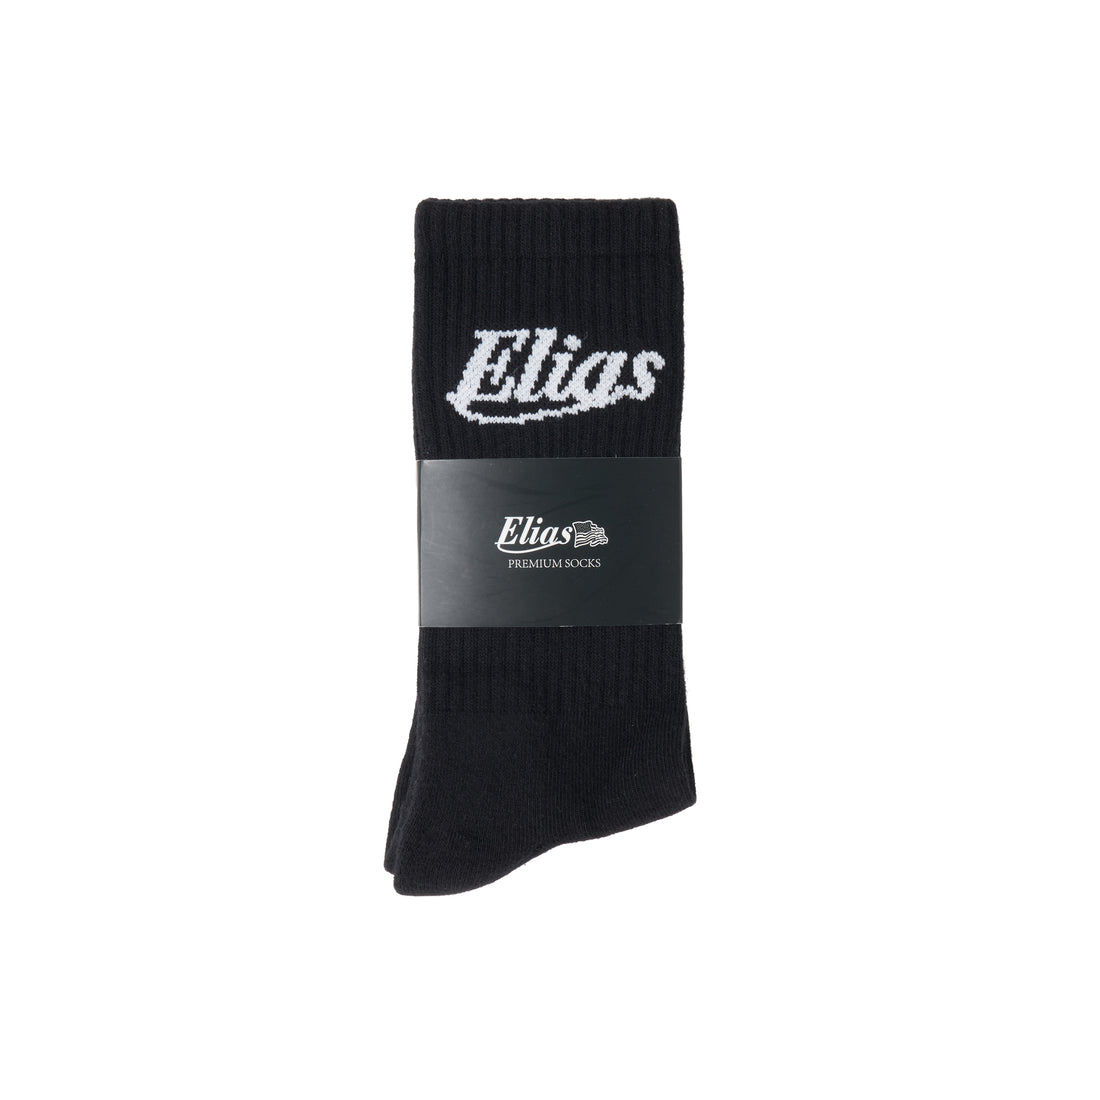 Elias New York Black Socks